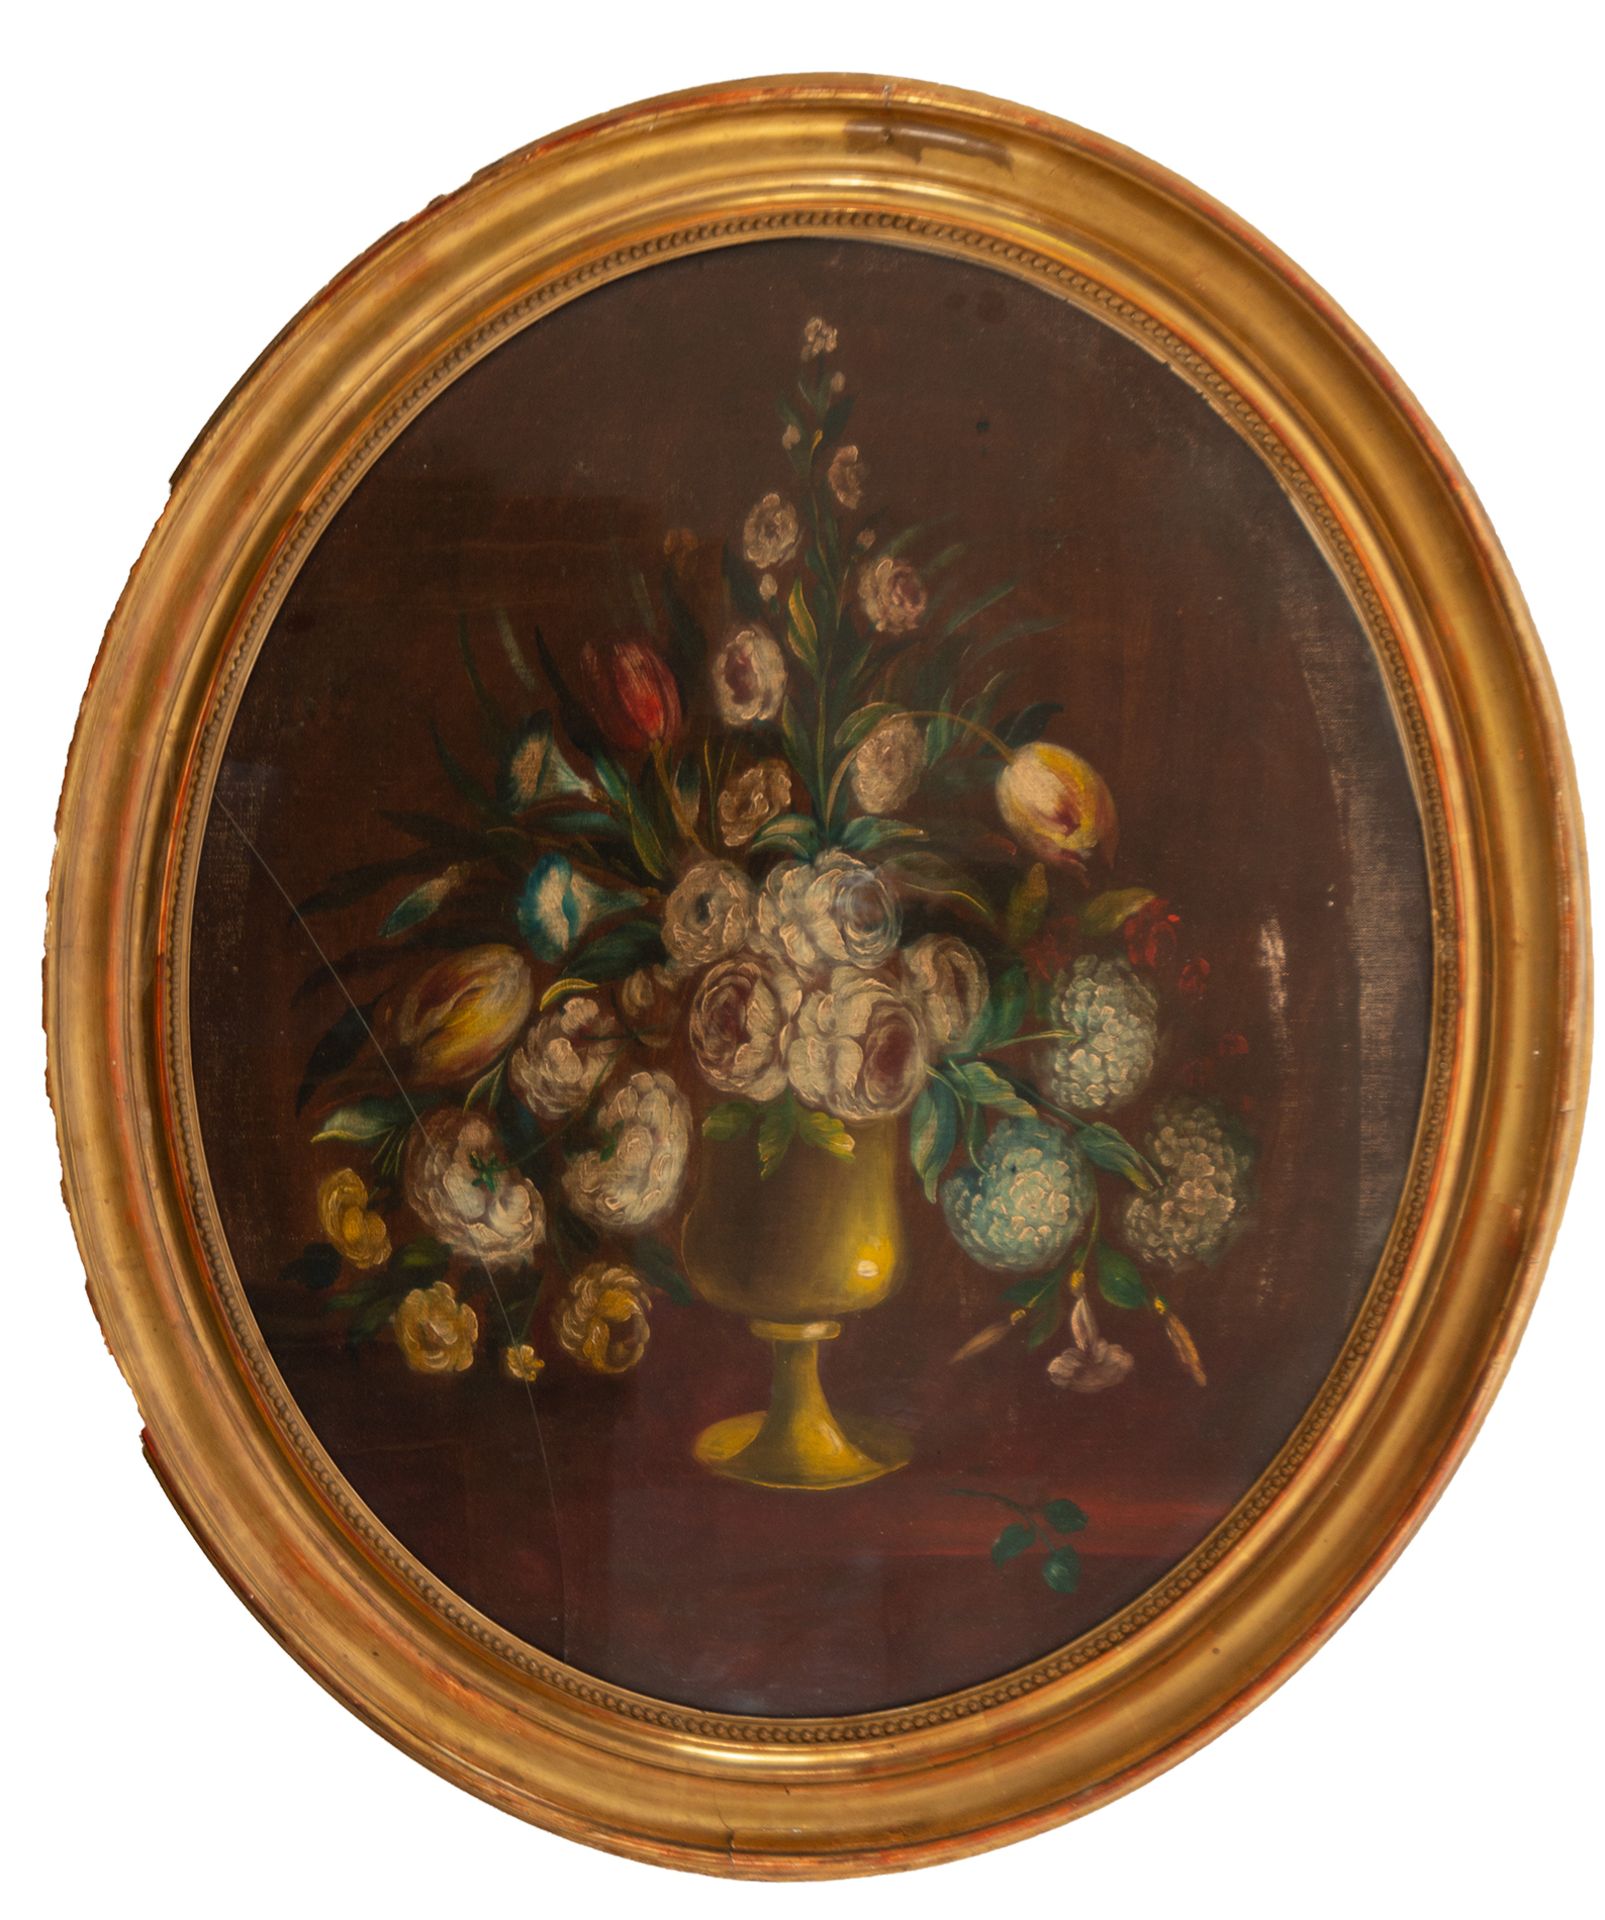 Pair of Oval Vases, 19th century Italian school